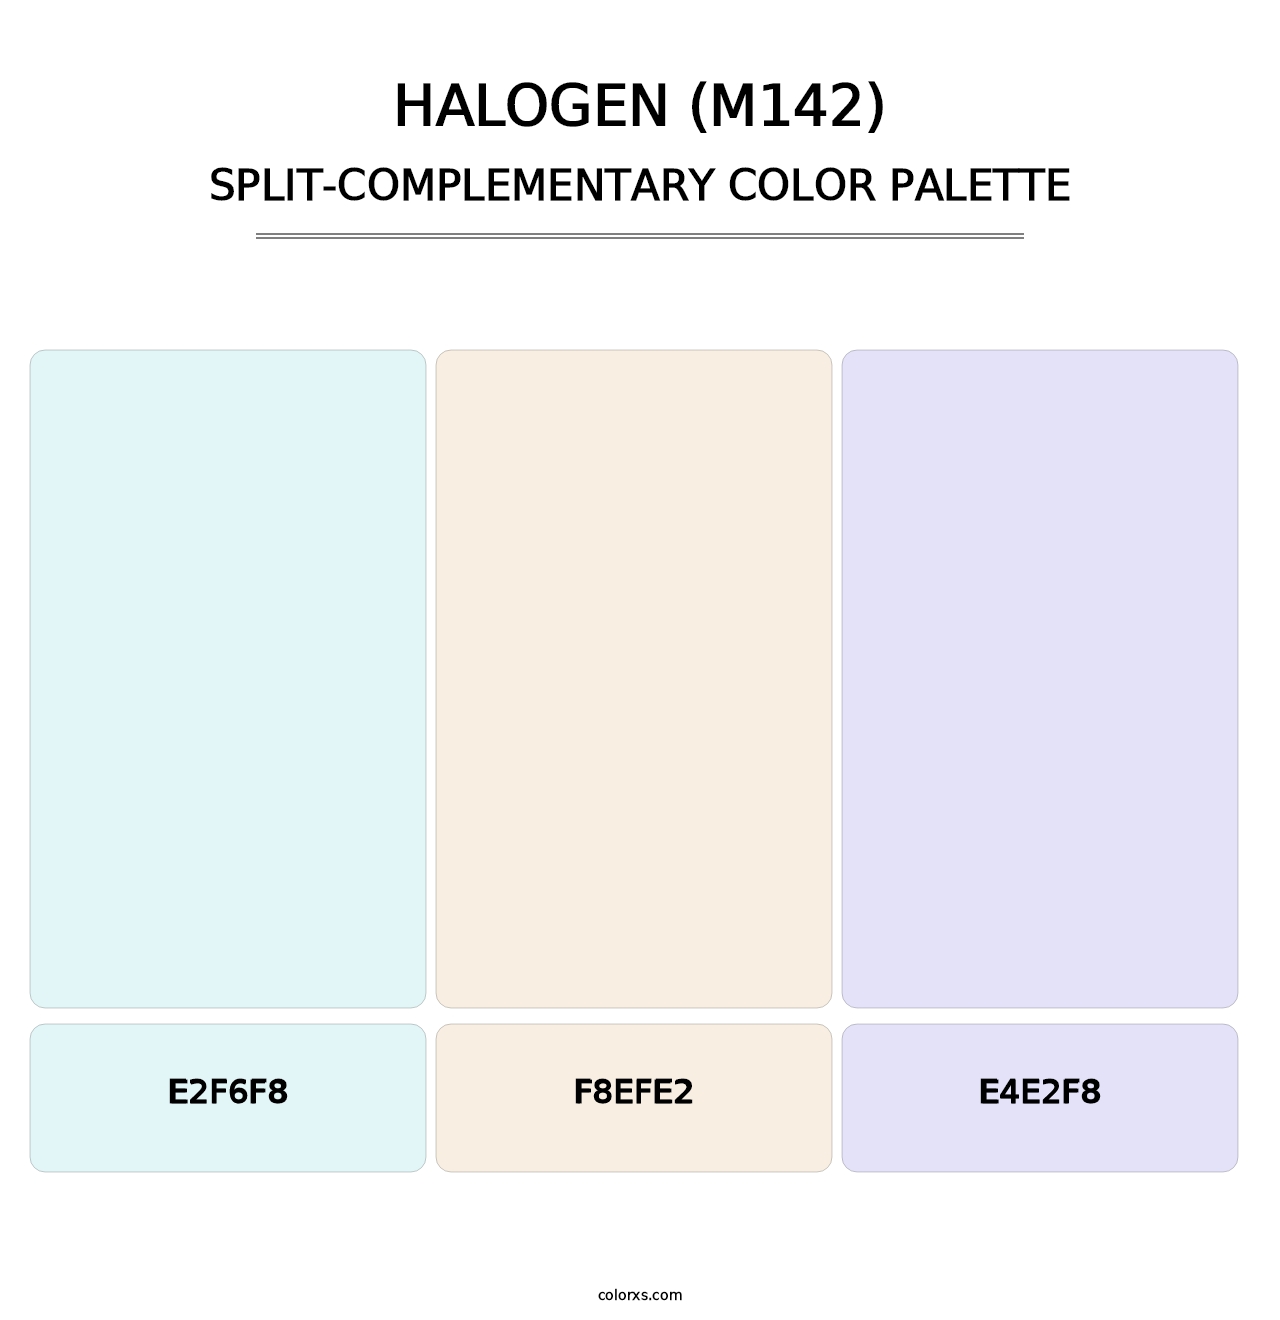 Halogen (M142) - Split-Complementary Color Palette